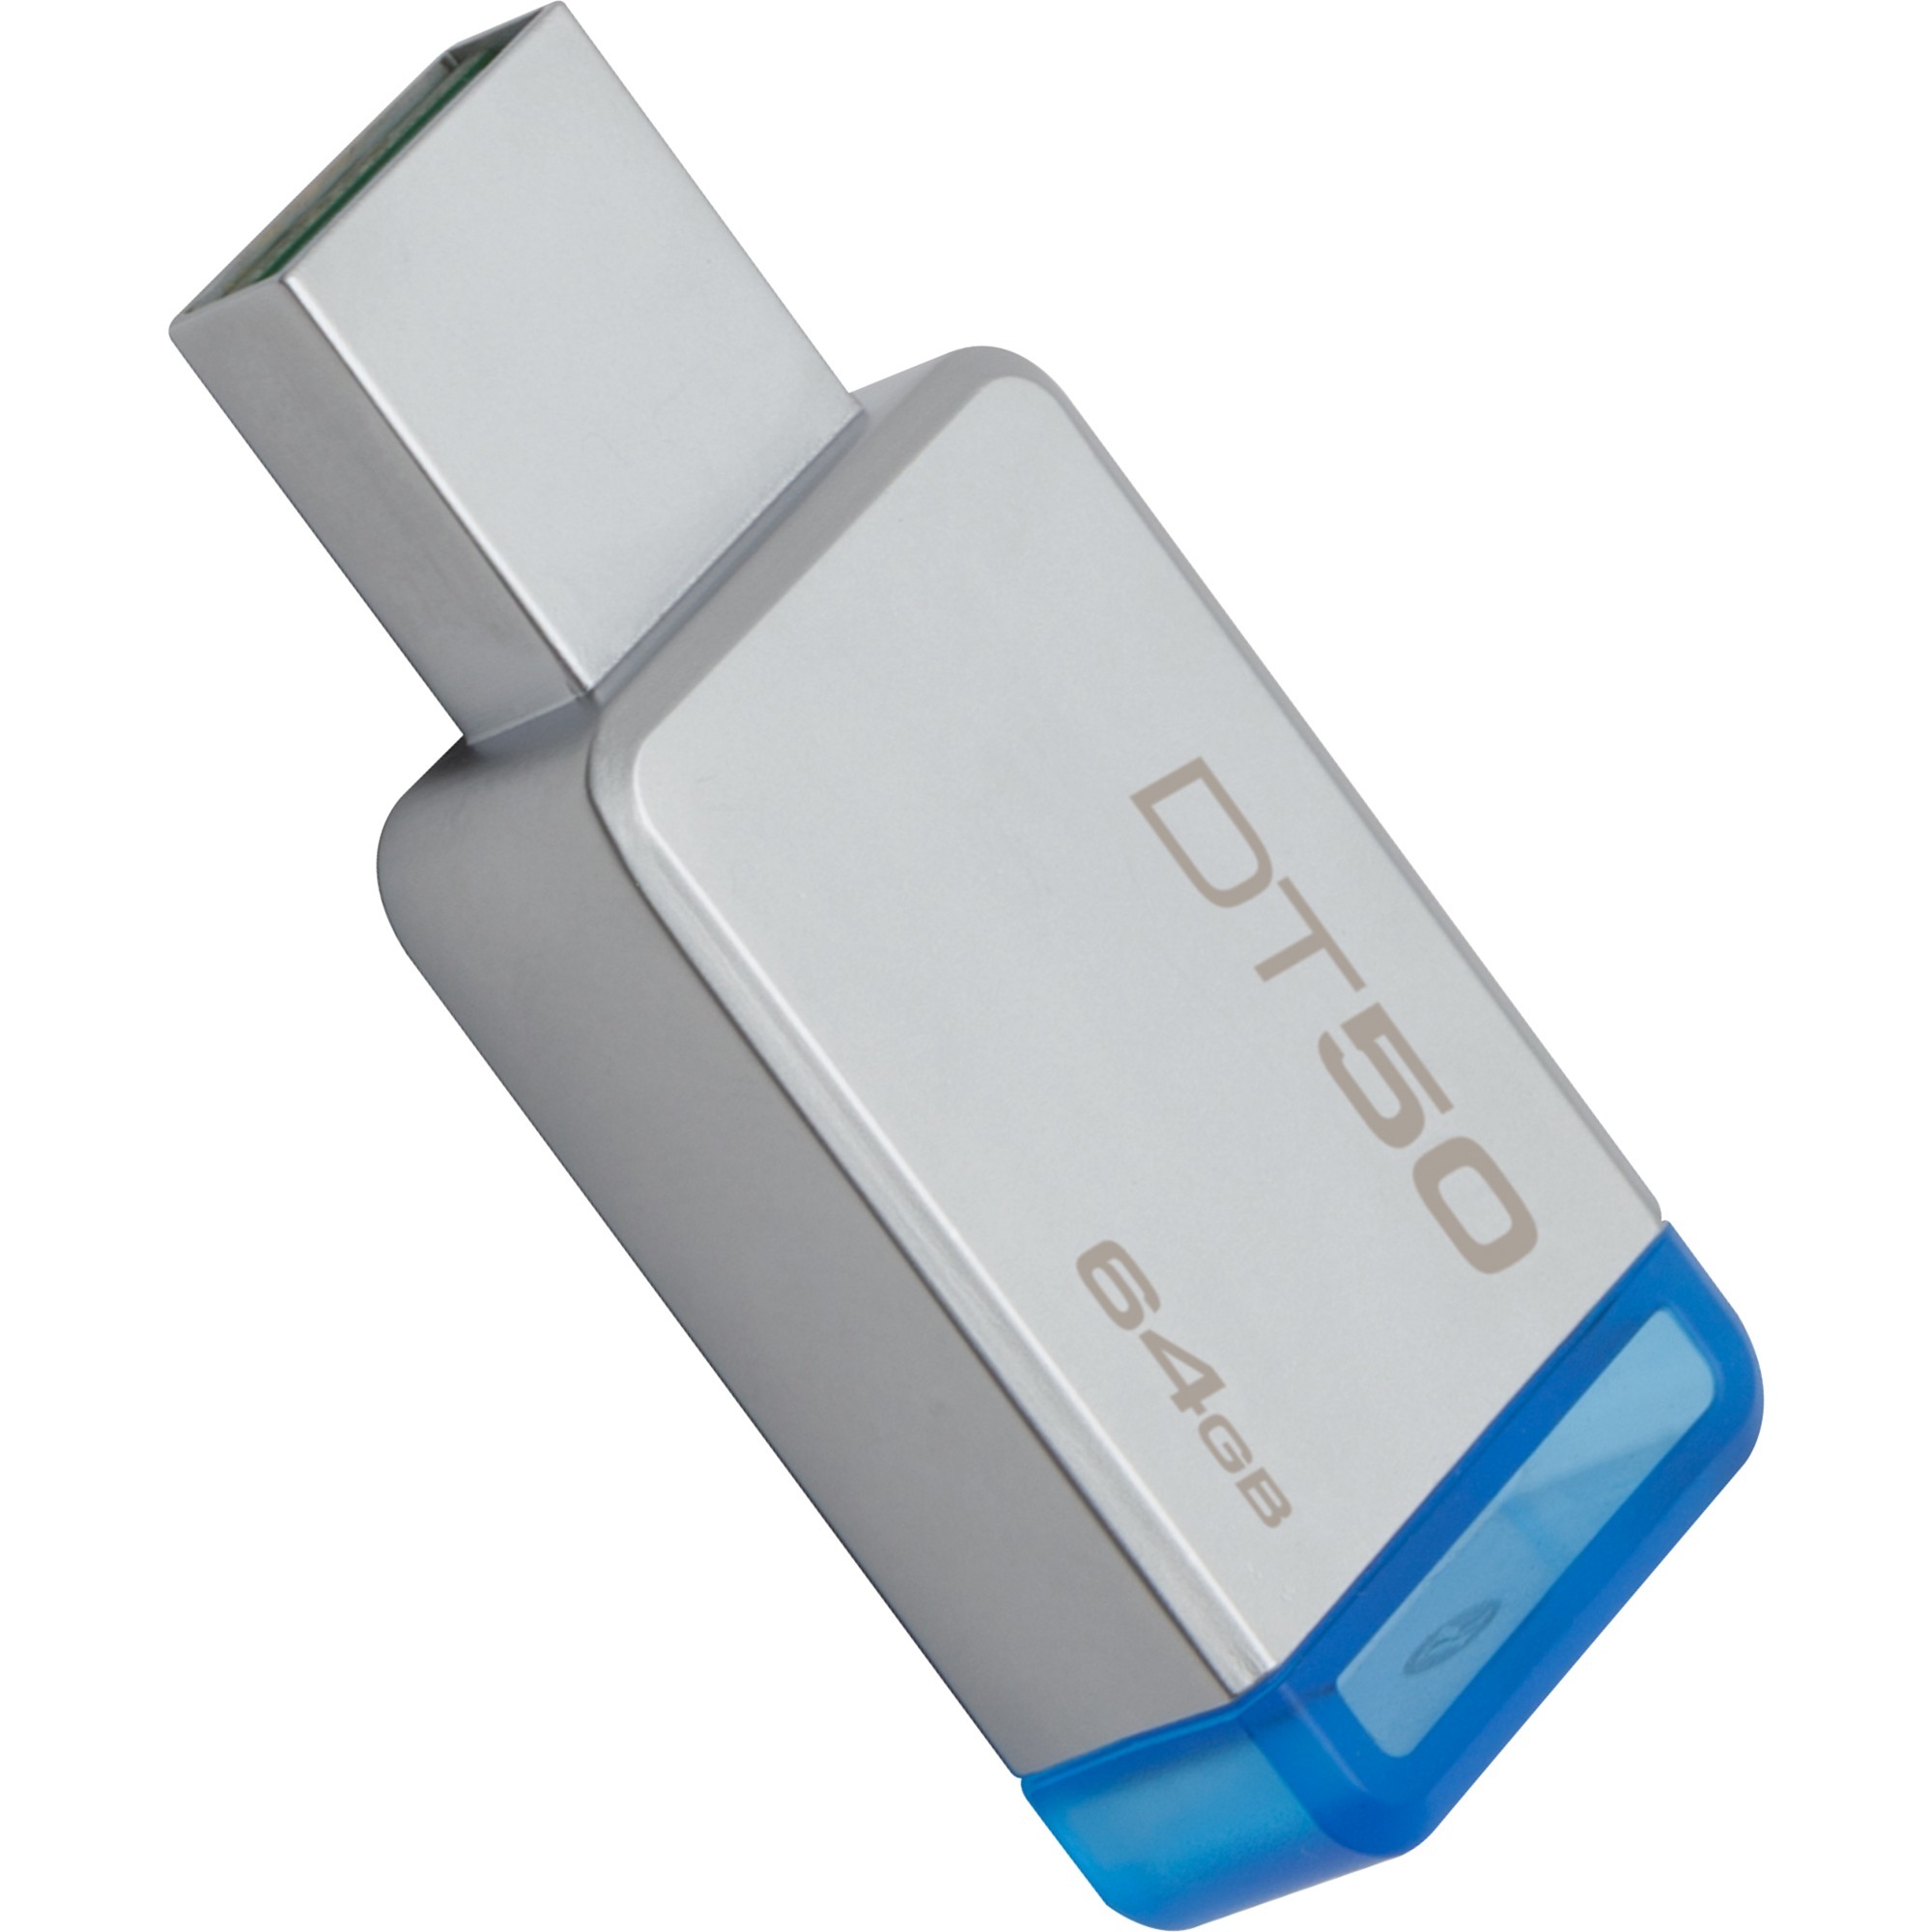 DataTraveler 50 64GB pami?? USB 3.0 (3.1 Gen 1) Z??cze USB typu A Niebieski, Srebrny, No?nik Pendrive USB